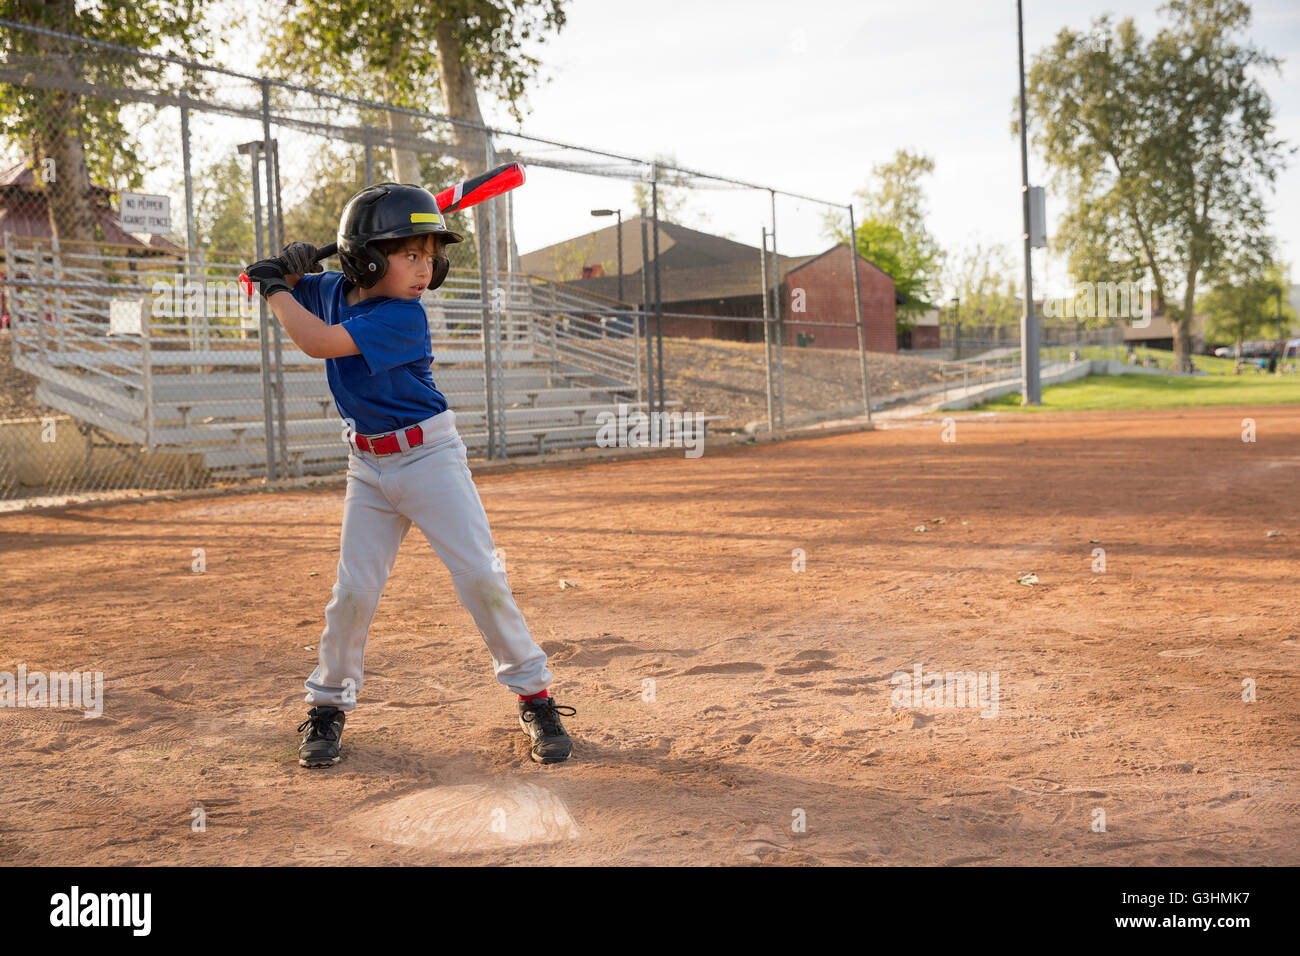 Boy batting at practise on baseball field Stock Photo